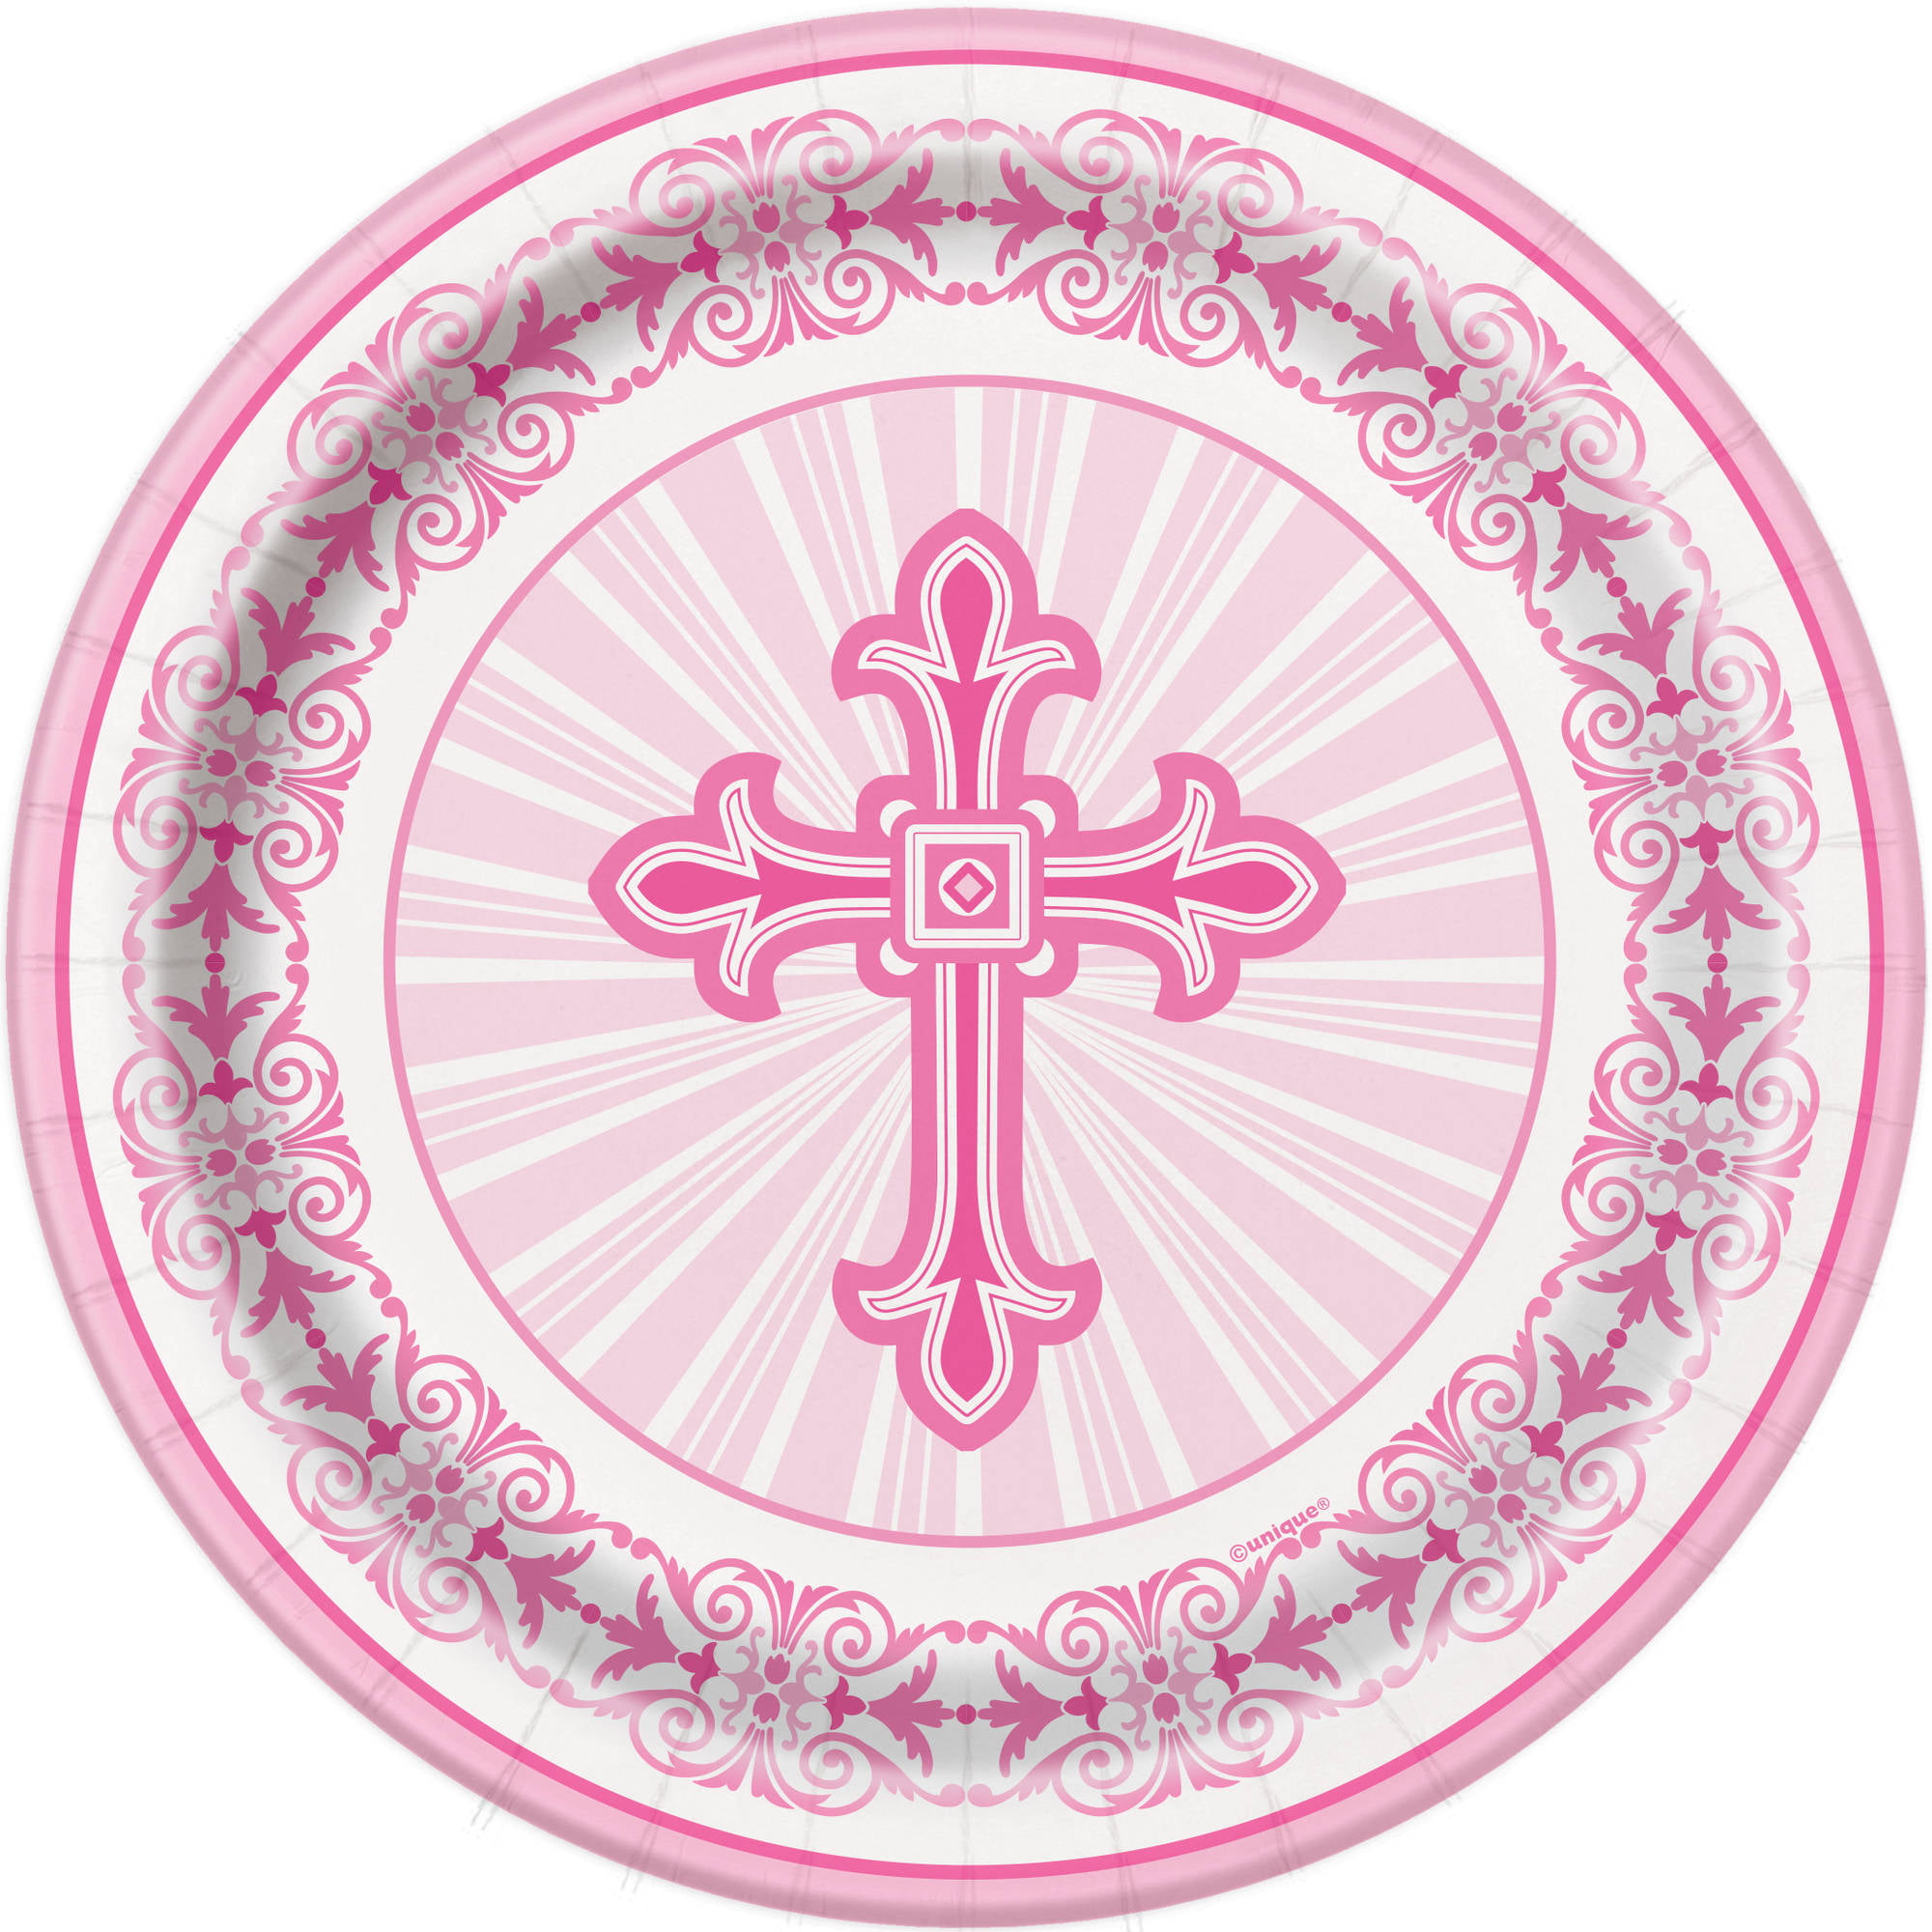 Unique Party 43783 Plastic Radiant Cross Pink Religious Tablecloth 7ft x 4...